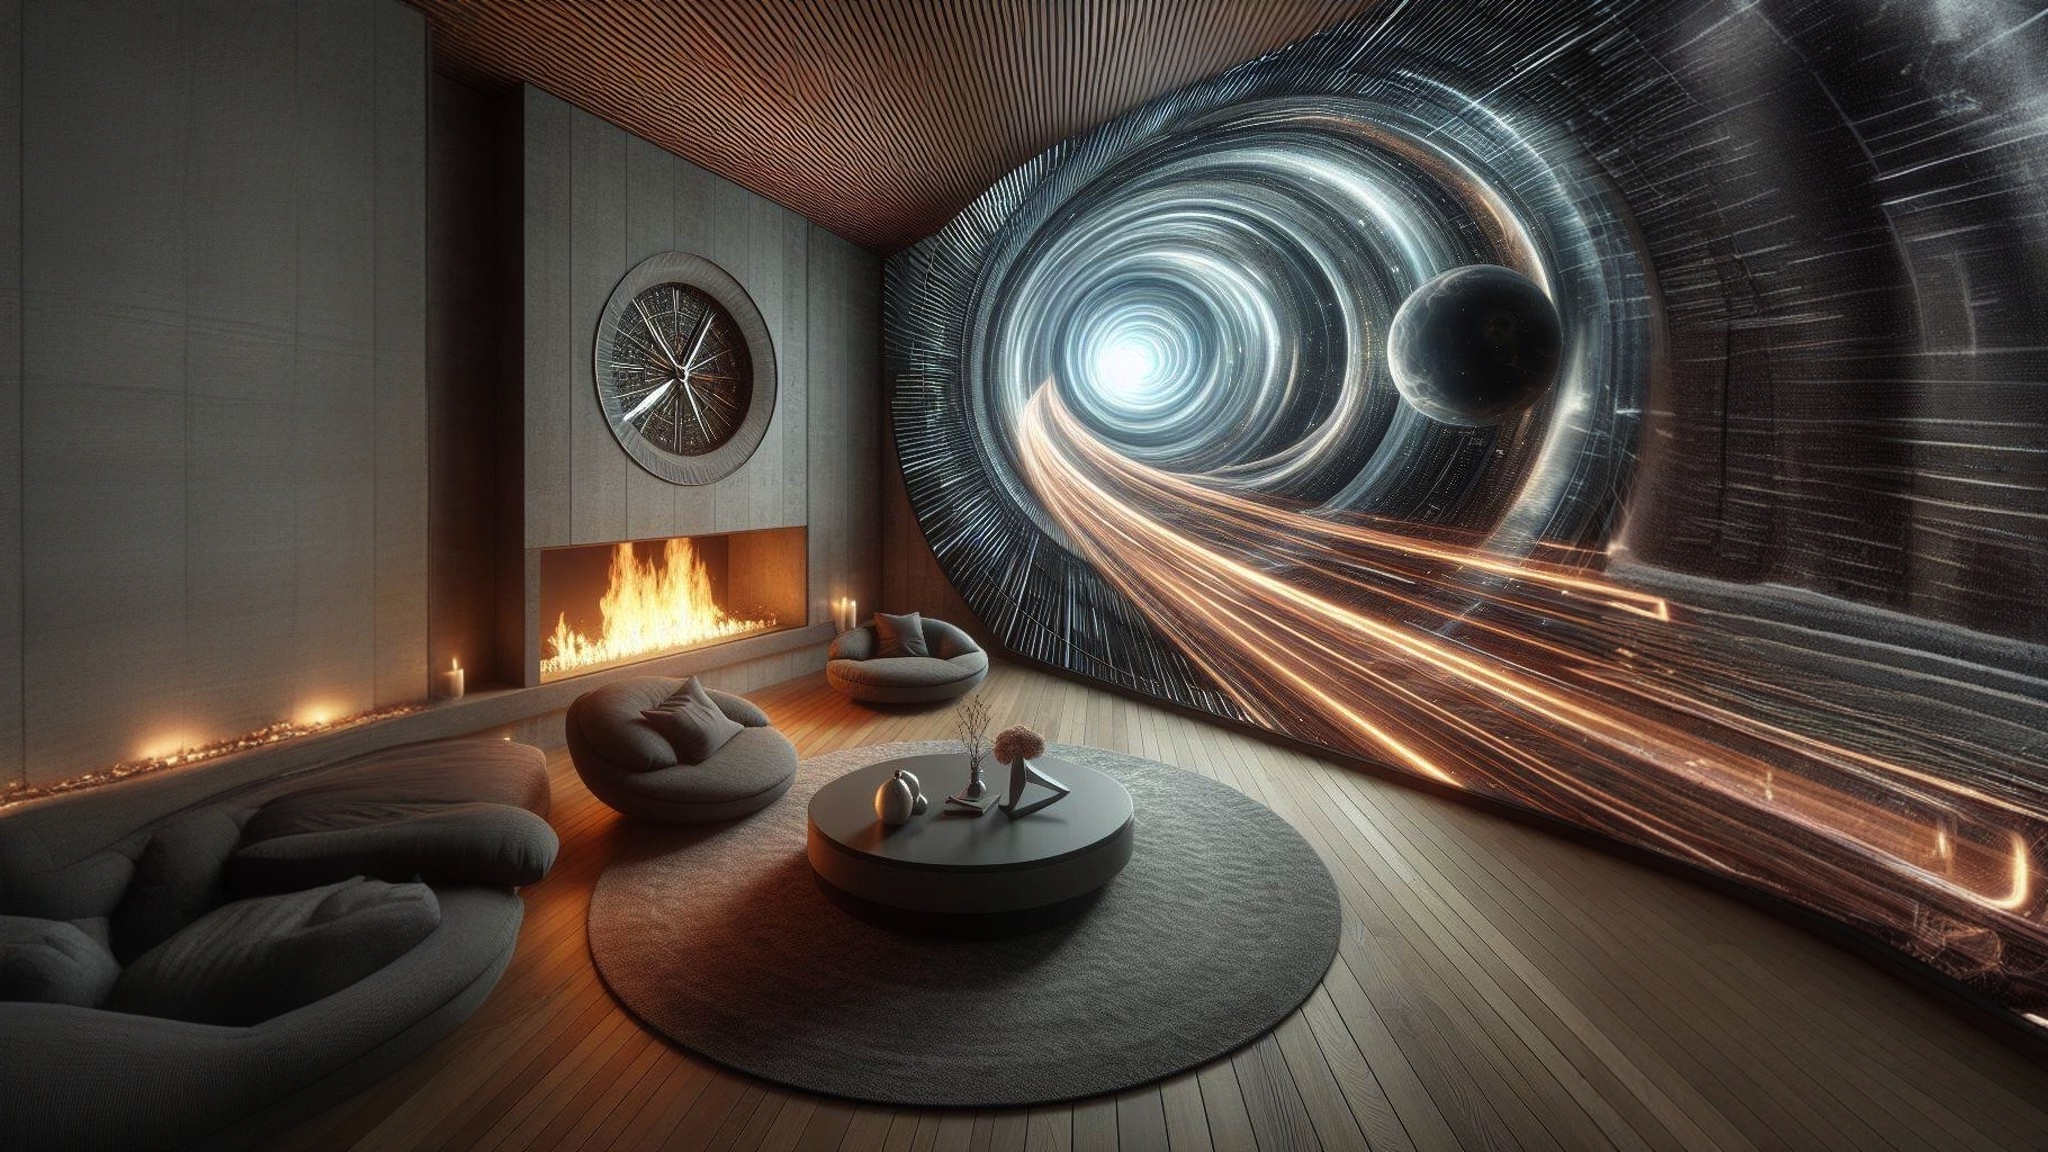 General 2048x1152 AI art digital art fireplace luxury homes tunnel wormhole science fiction